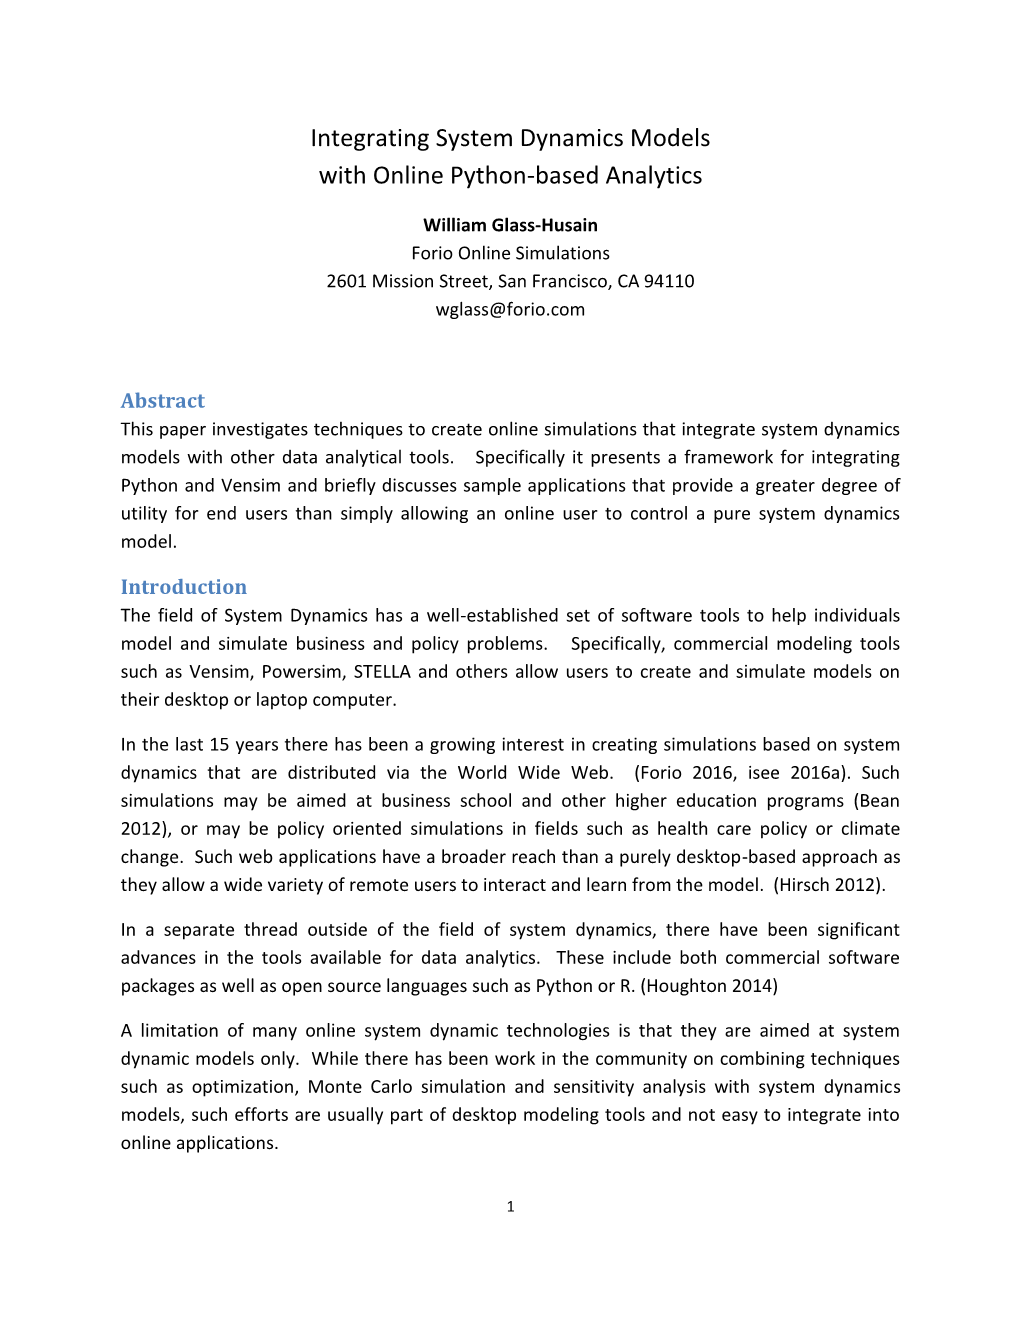 Integrating System Dynamics Models with Online Python-Based Analytics